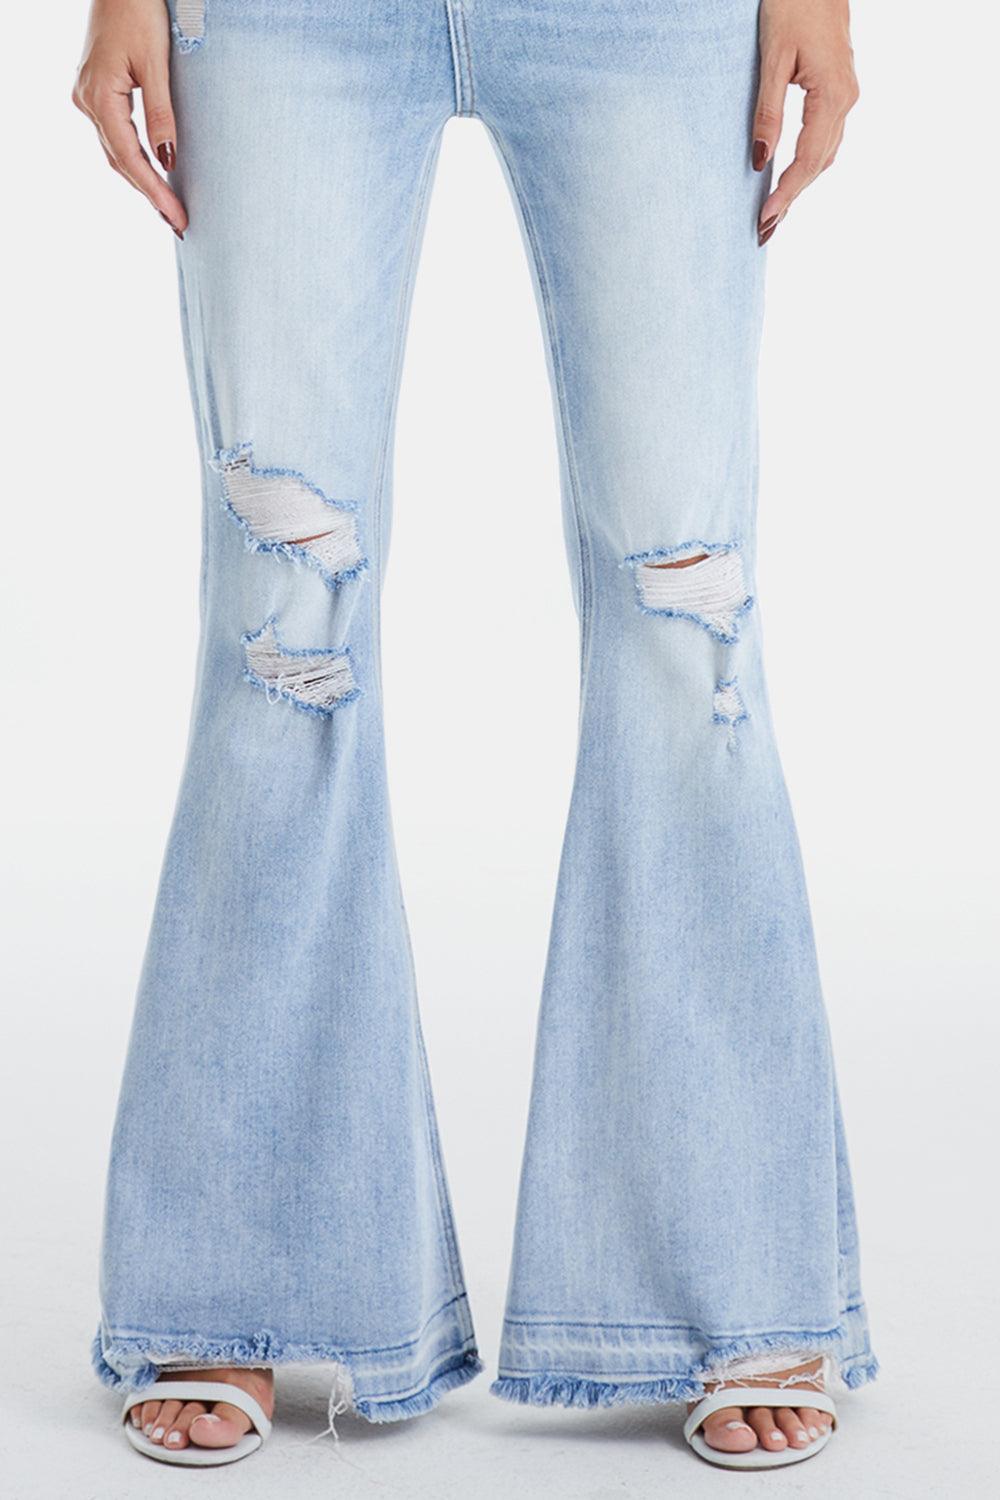 BAYEAS Distressed Raw Hem High Waist Flare Jeans - Jessiz Boutique